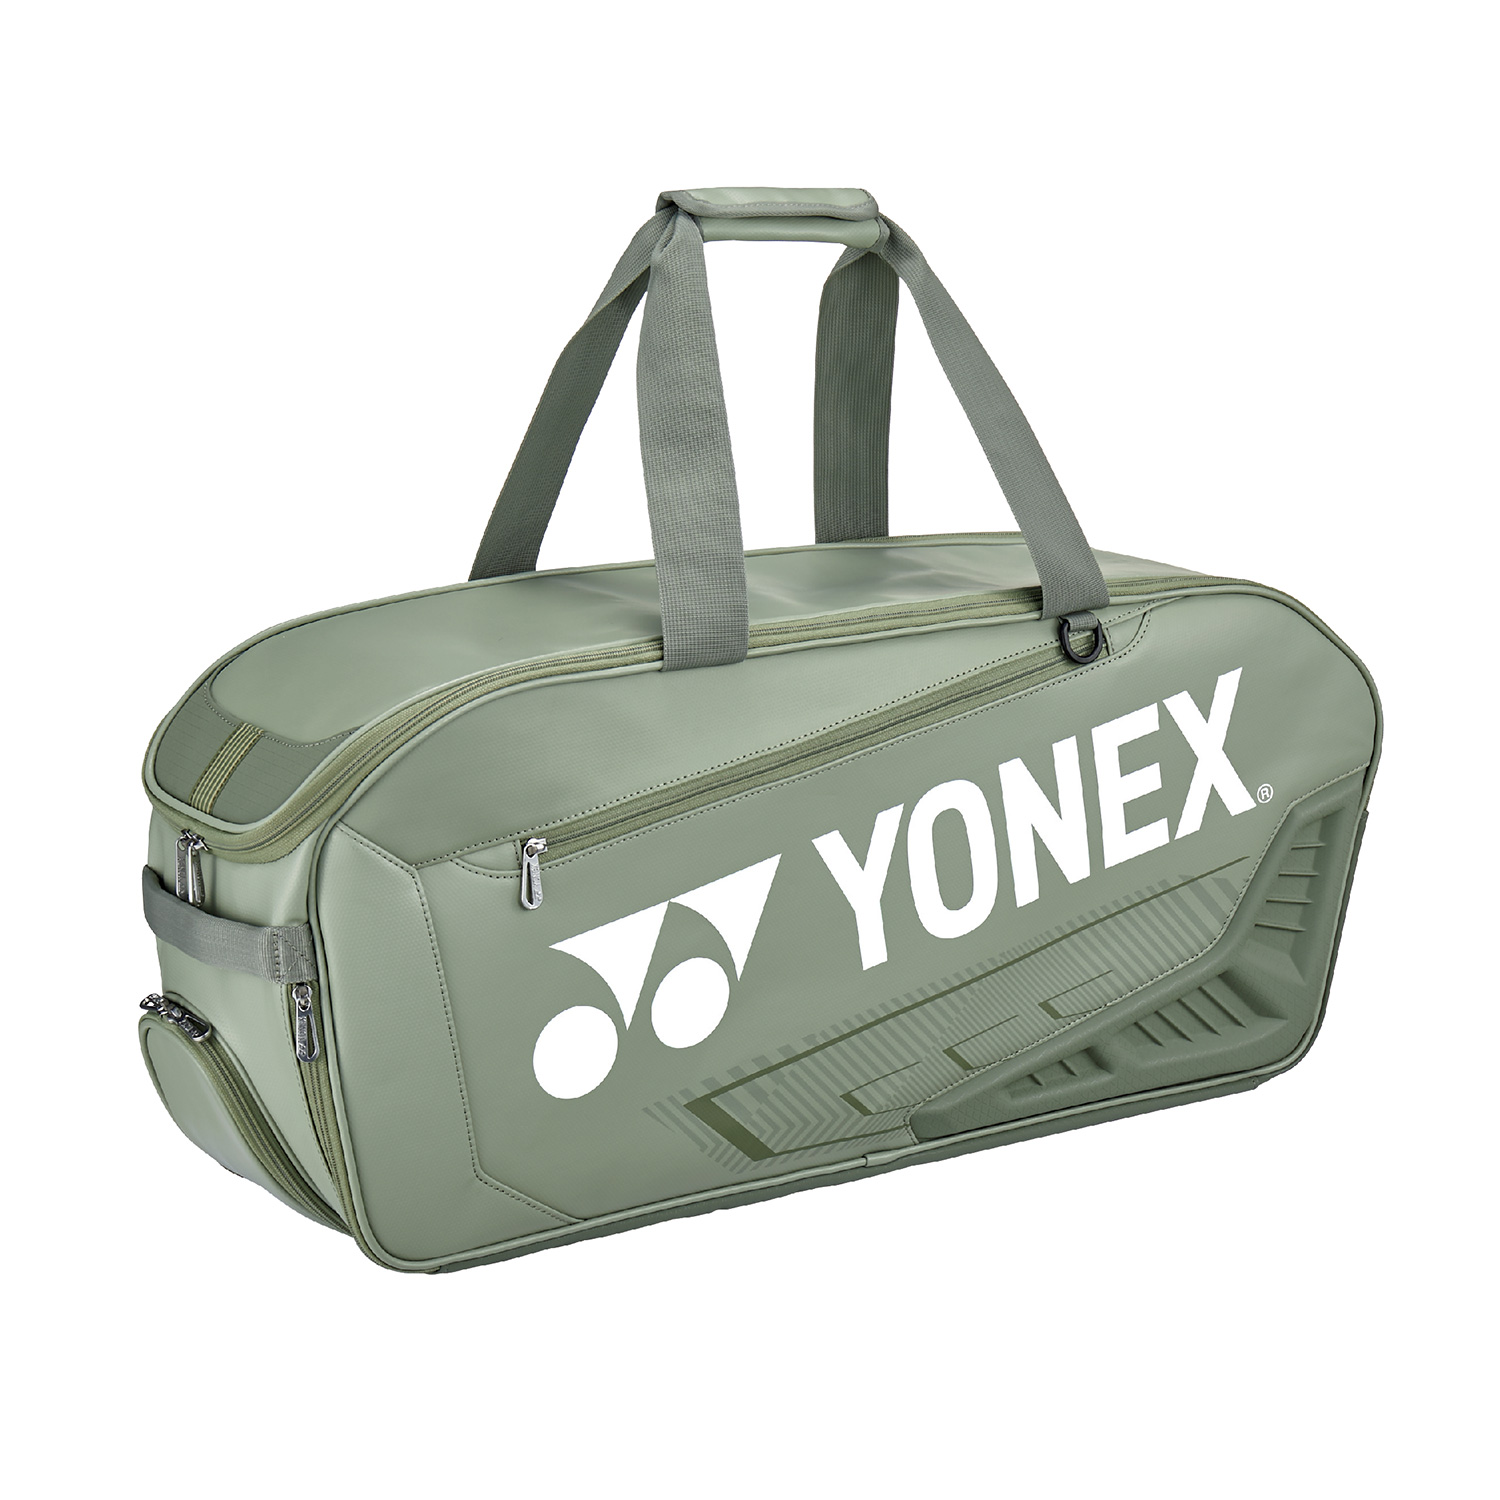 Yonex Expert Tournament Borsone - Smoke Mint